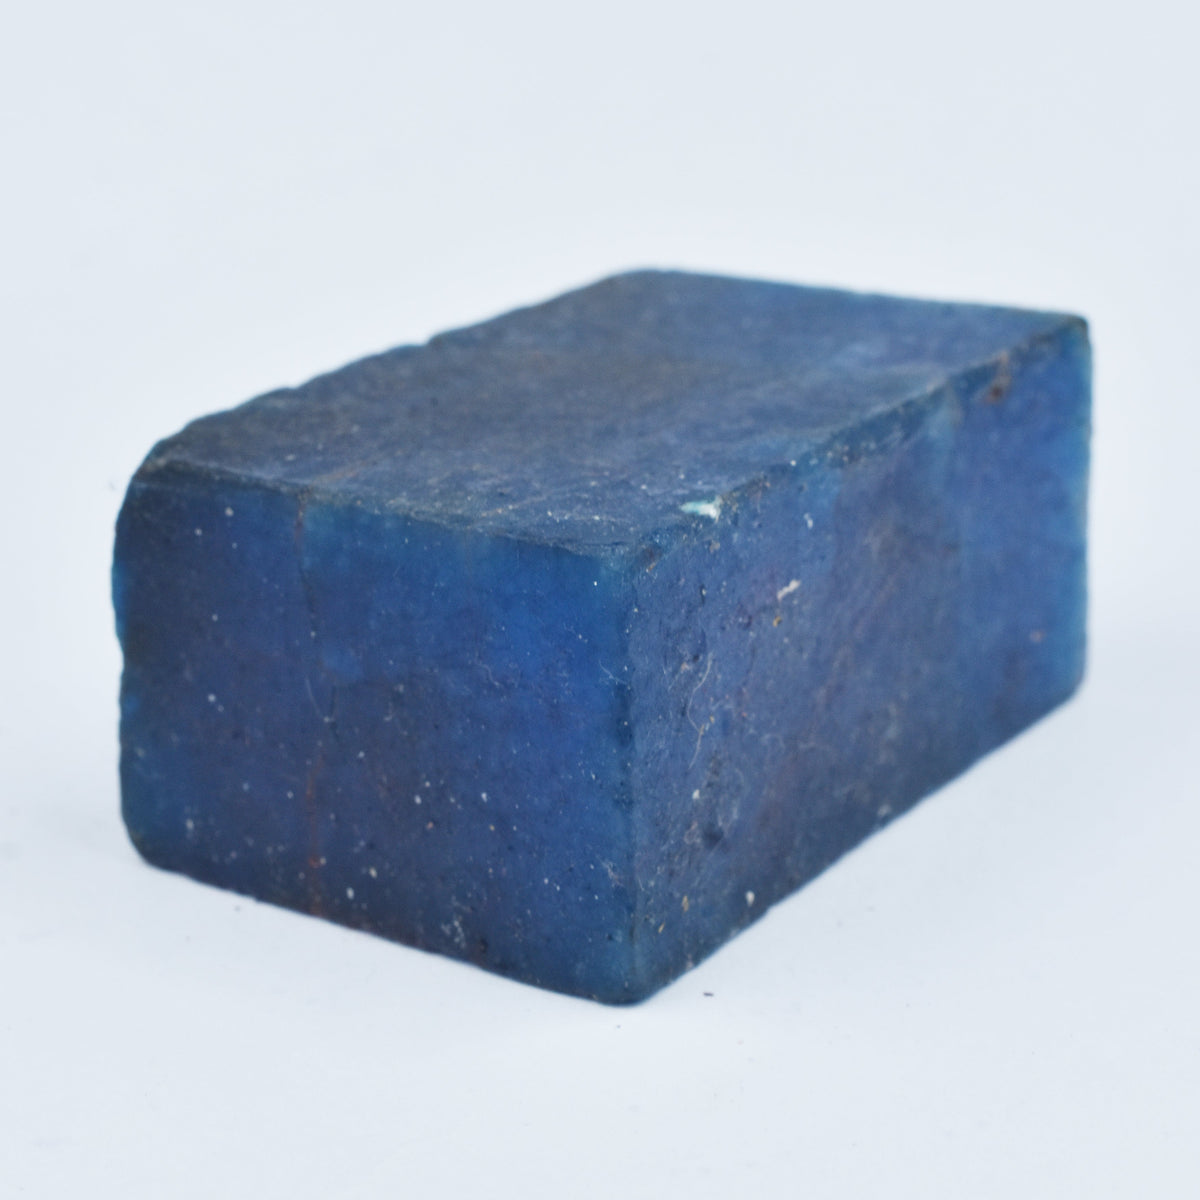 Natural Blue Aquamarine Raw 500 Ct Approx Uncut High-class Quality Rough Loose Gemstone CERTIFIED Rough Uncut Healing Earth Mined Brazilian Mines Rare Found Rock Gemstone